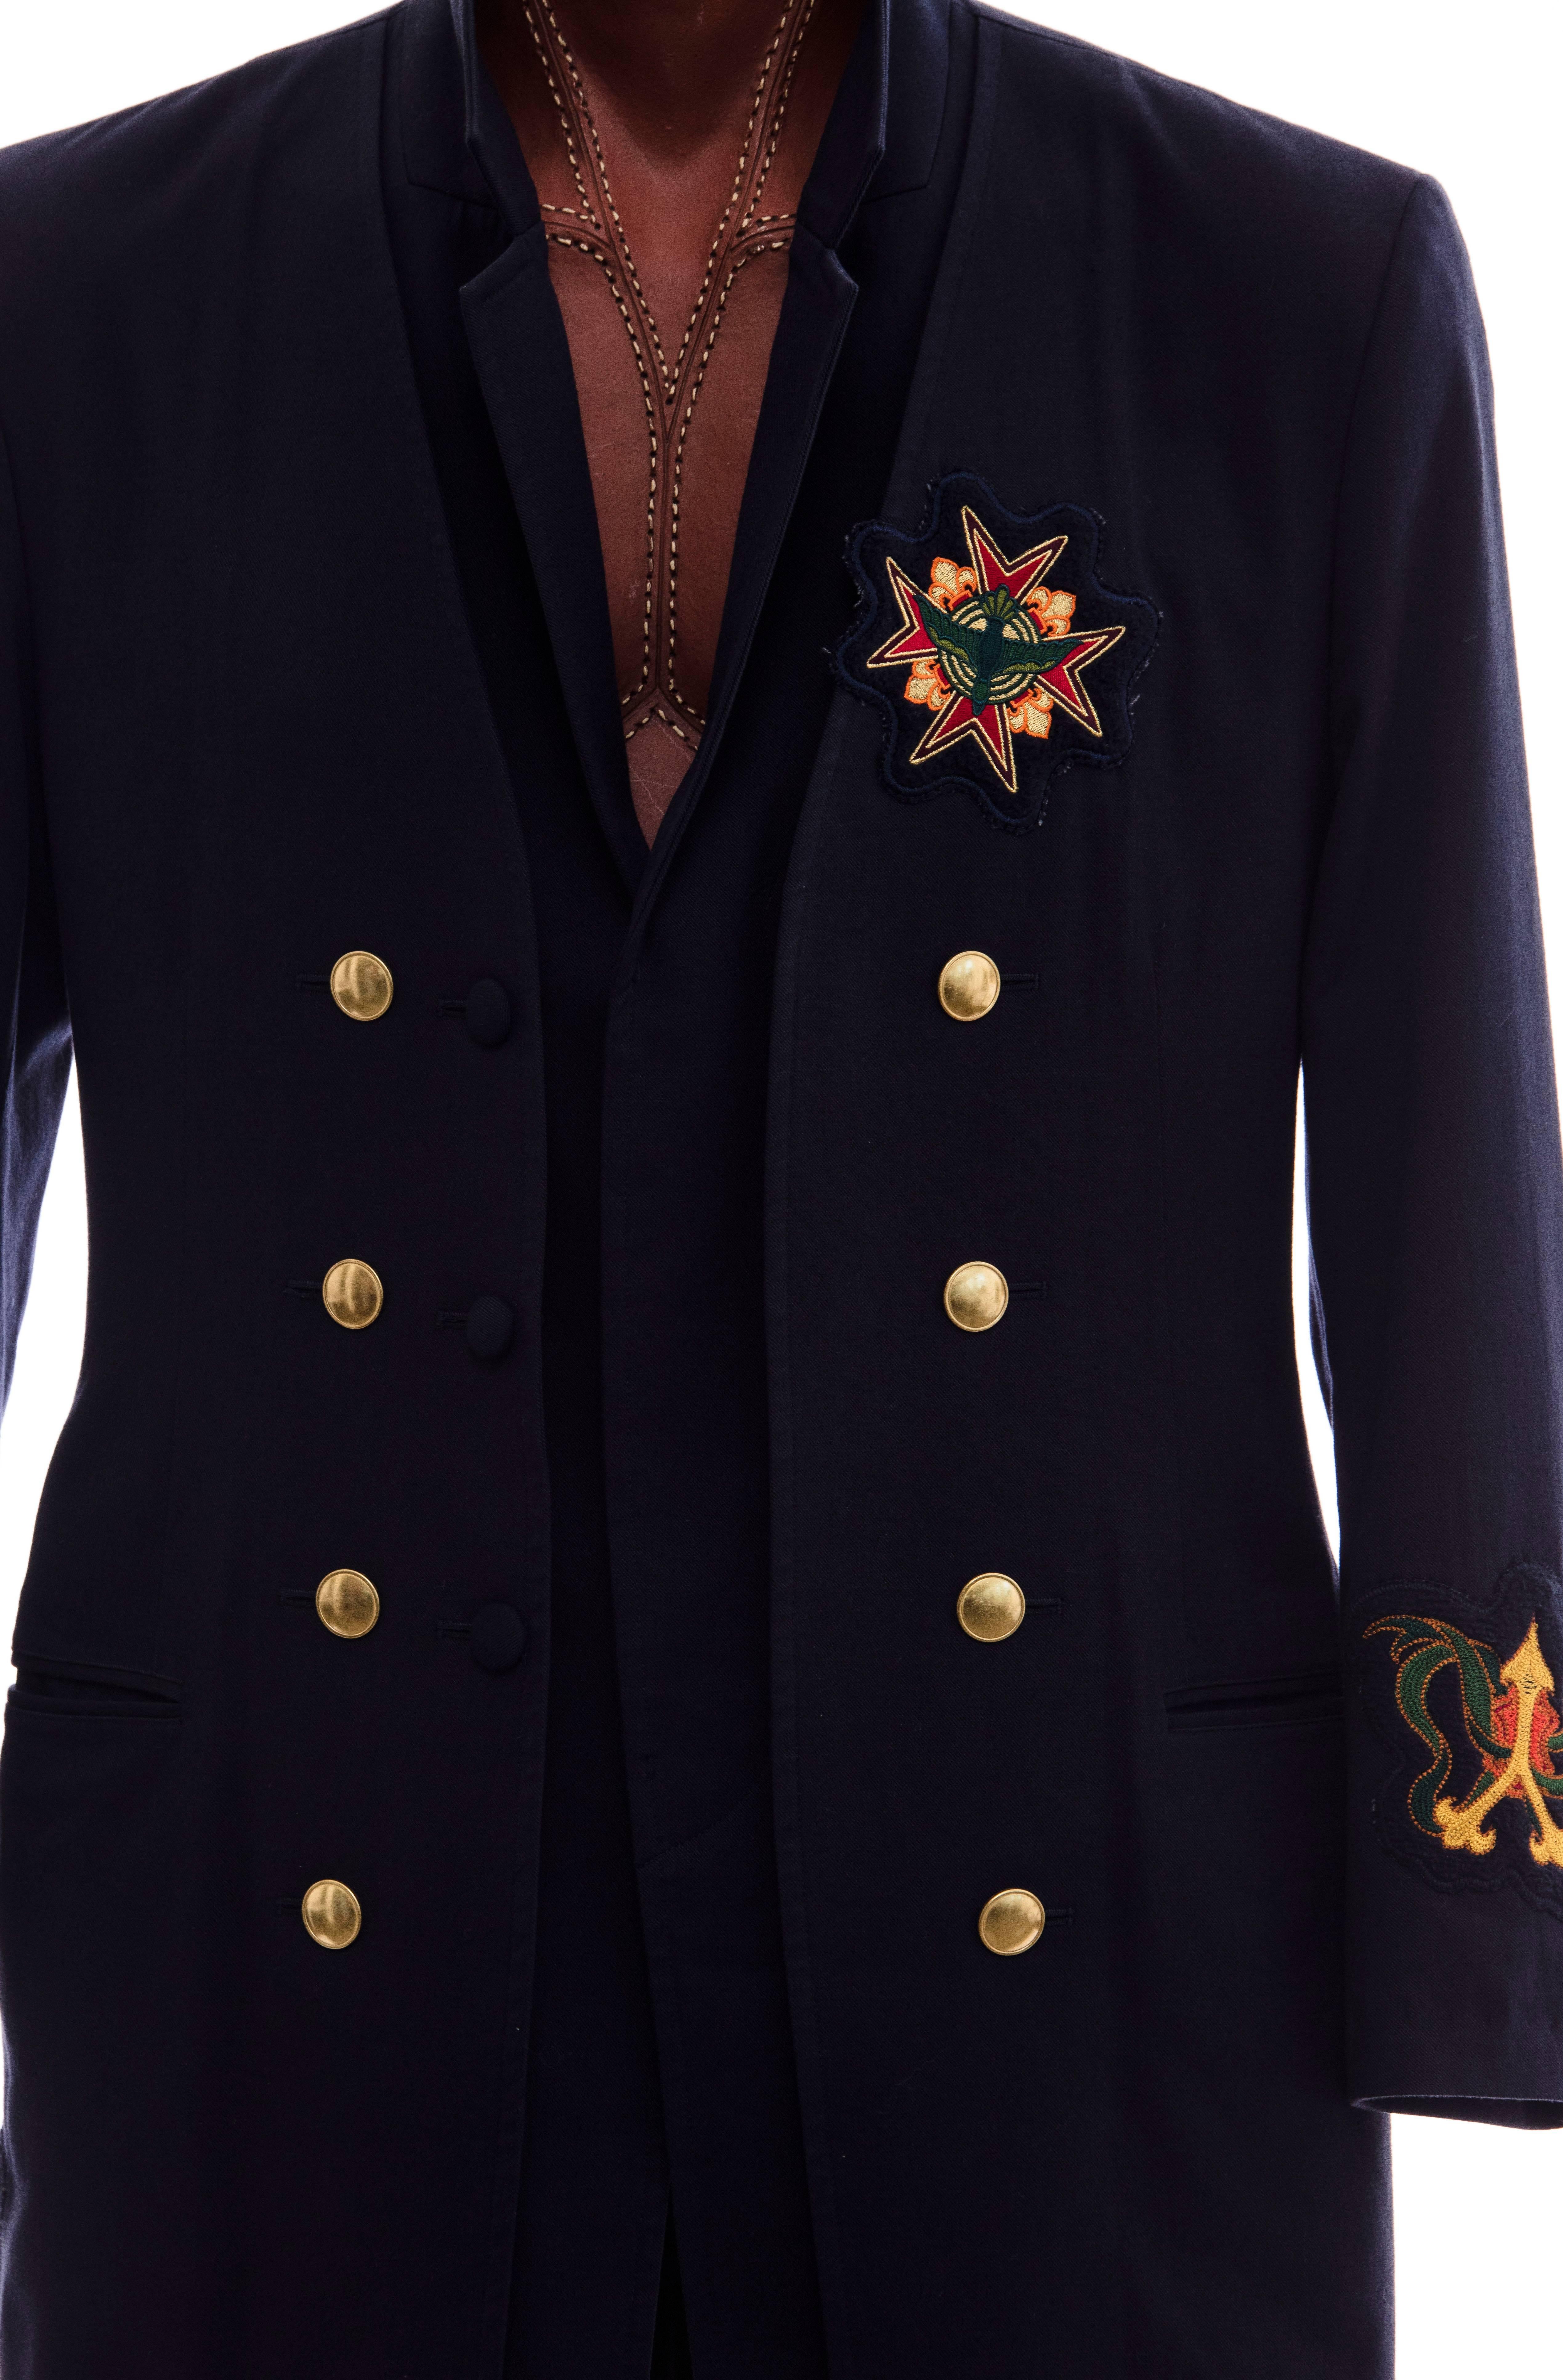 Yohji Yamamoto Men's Cotton Rayon Wool Navy Coat With Patches, Fall 2012 2